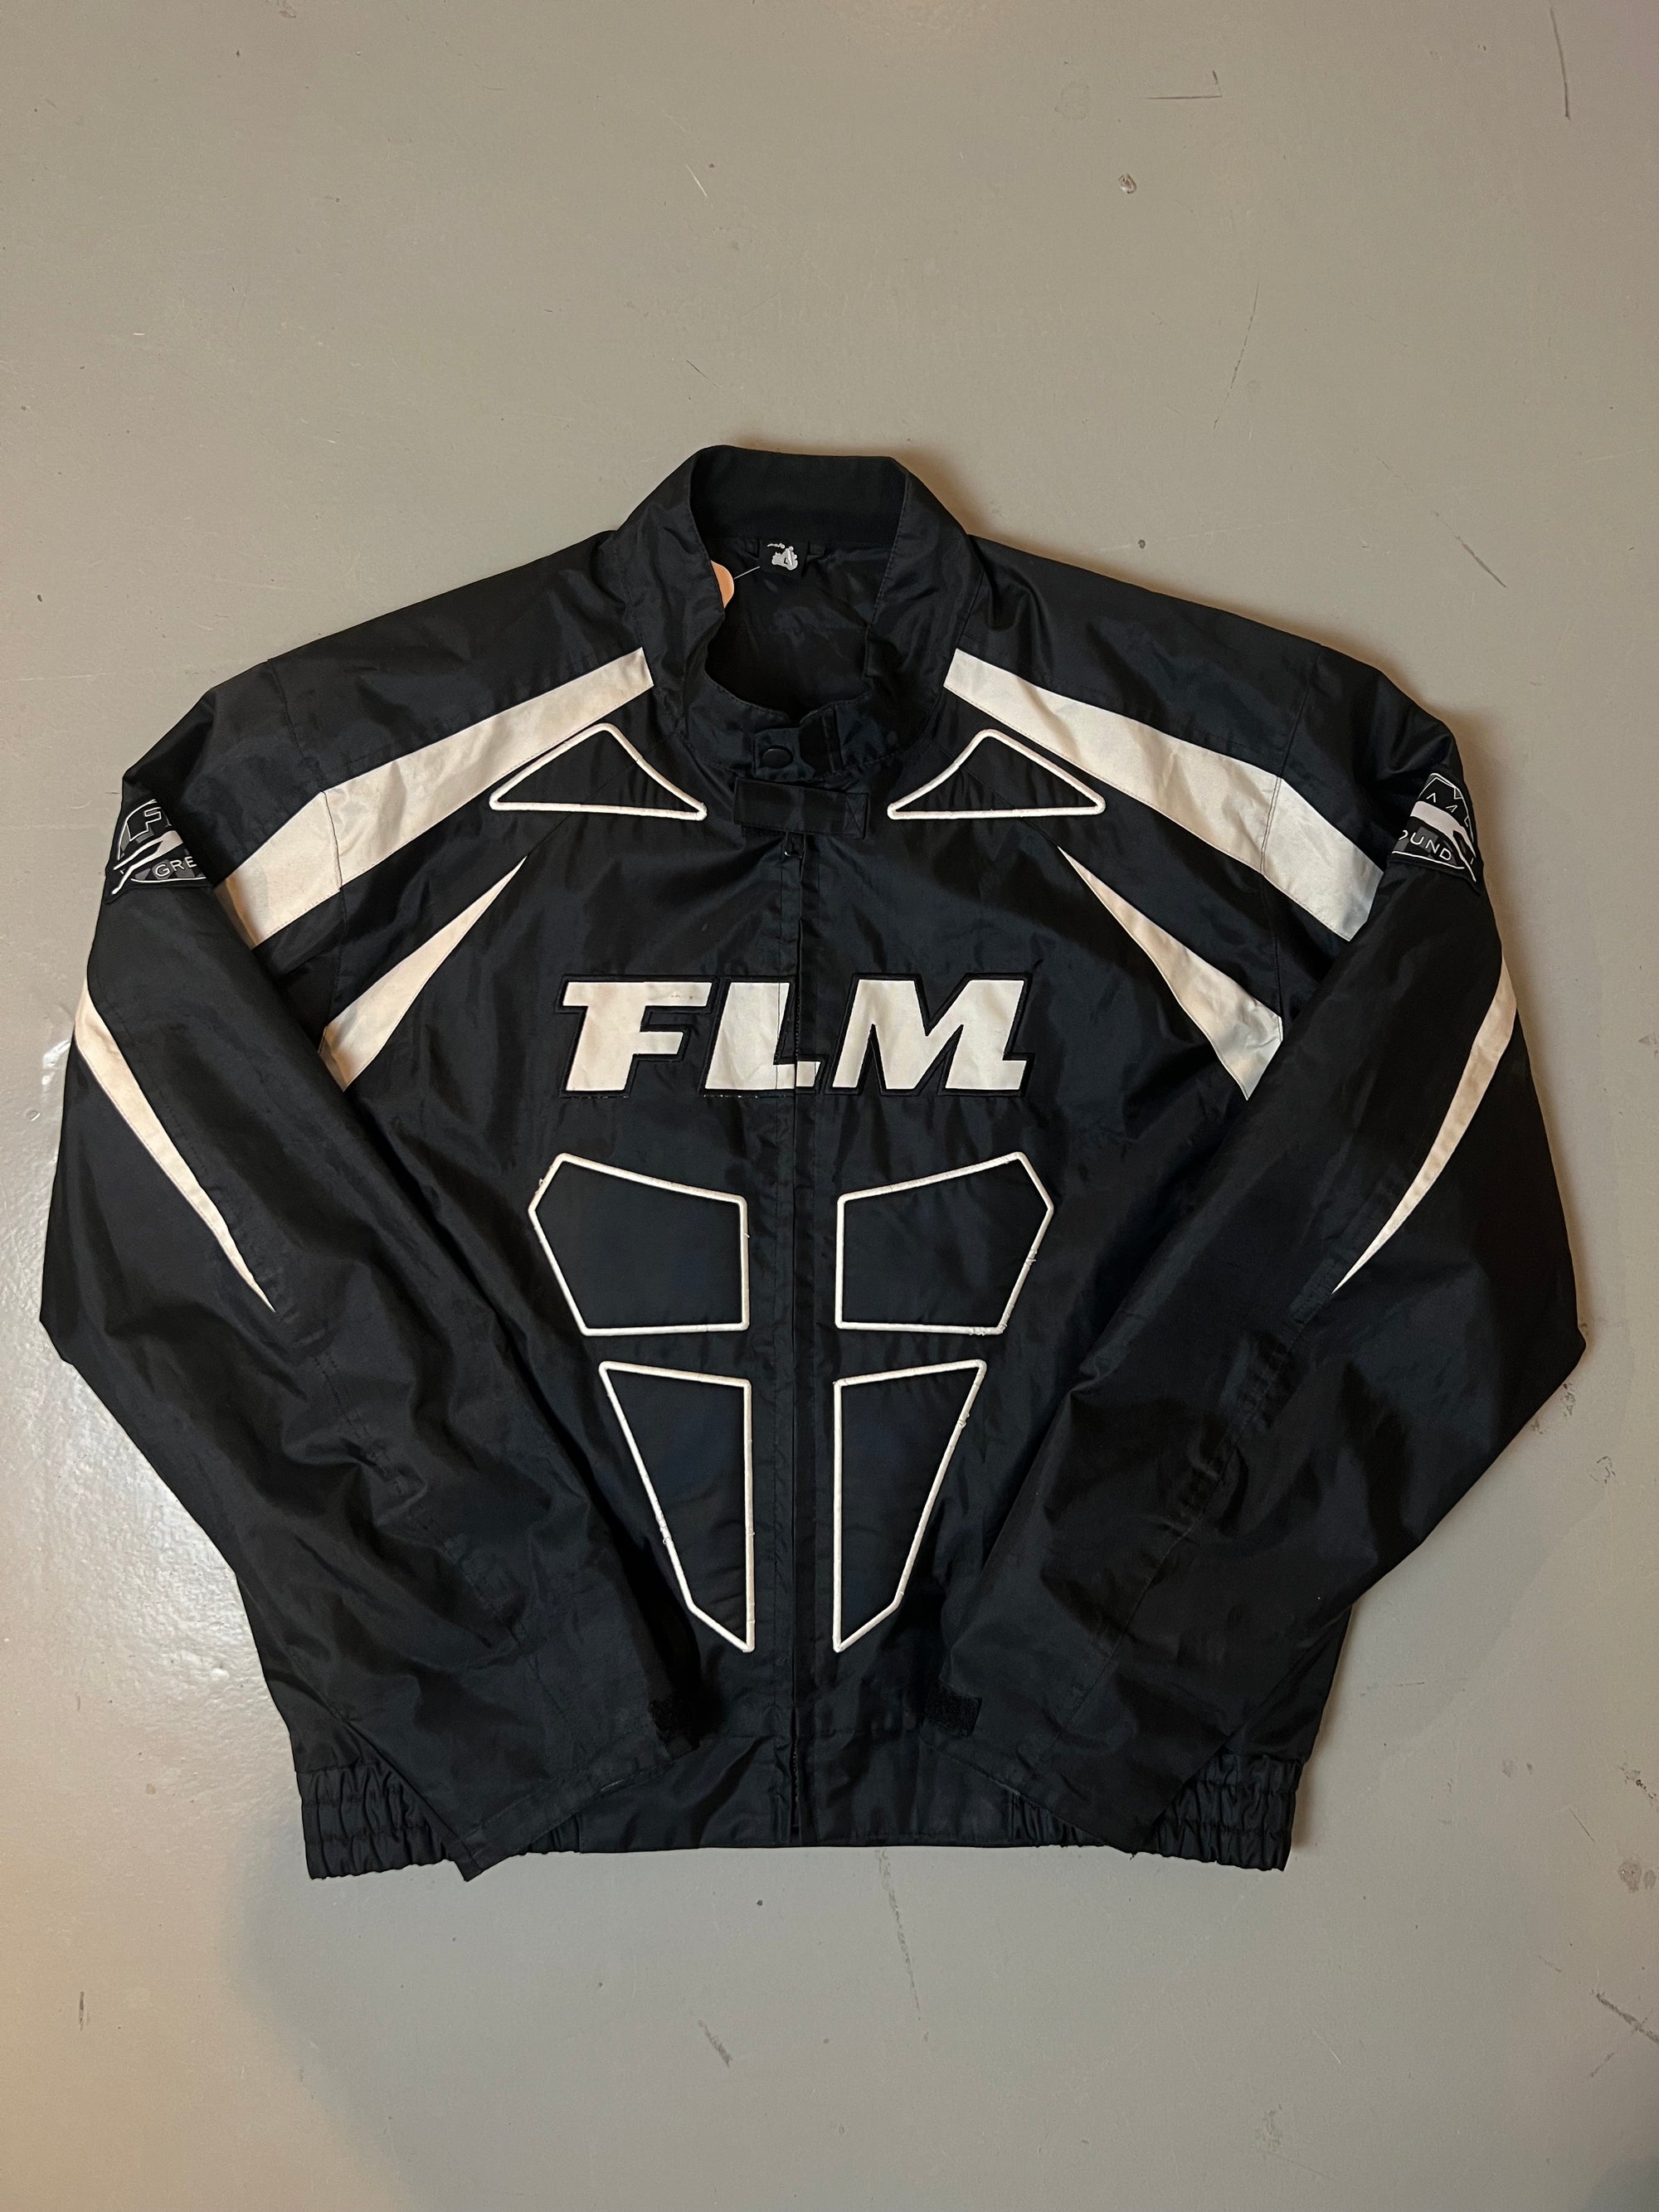 Produkt Bild Vintage FLM Racing Jacket von vorne